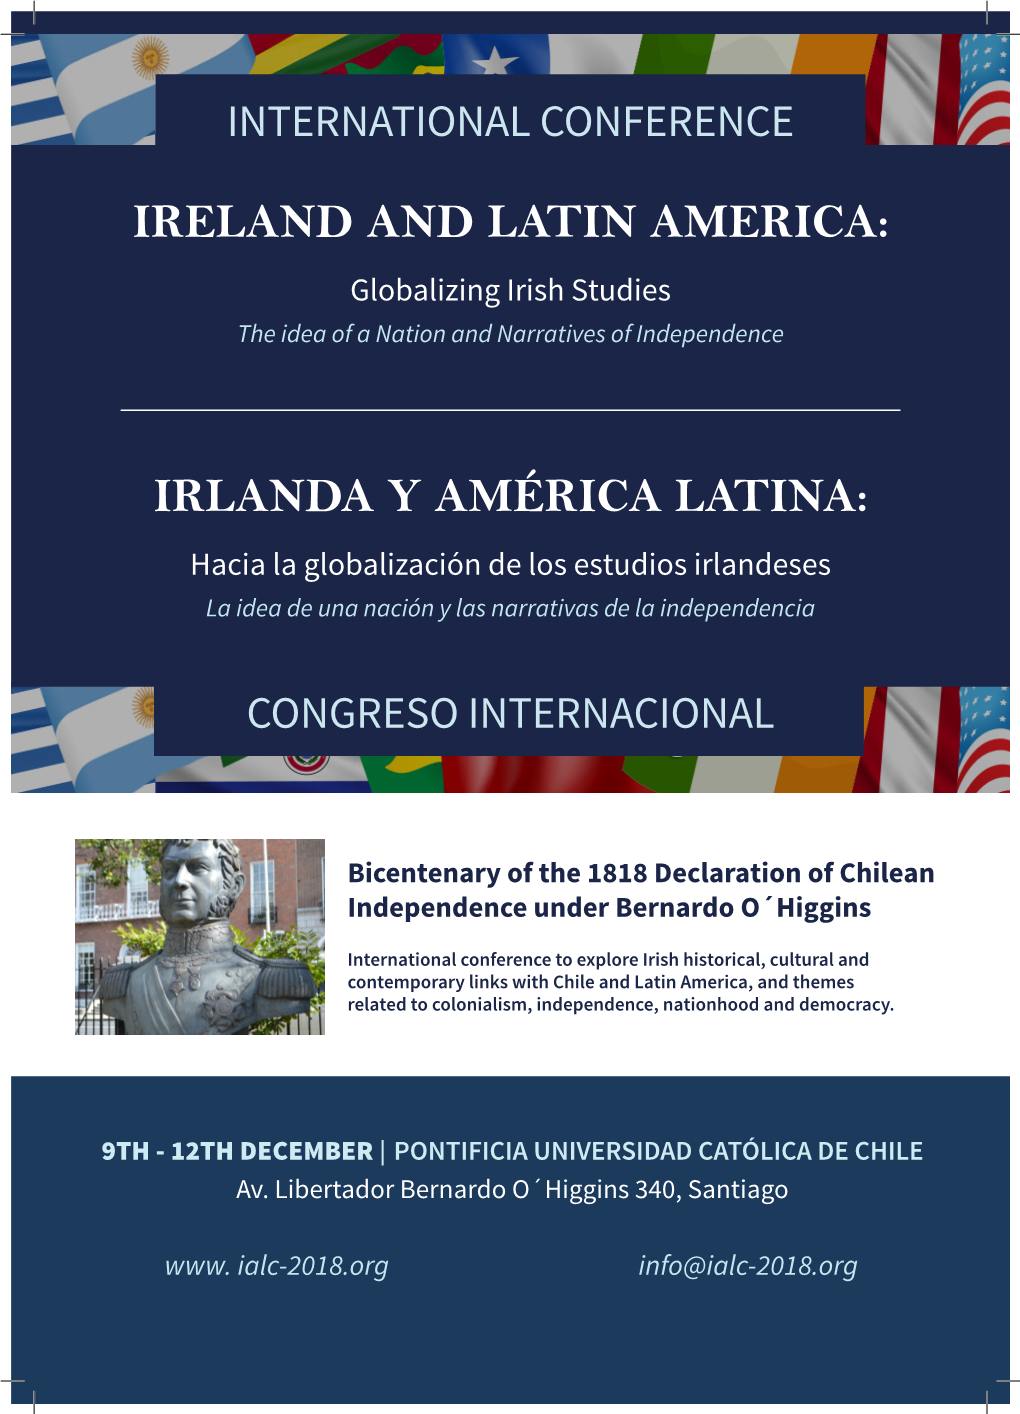 Ireland and Latin America: Irlanda Y América Latina